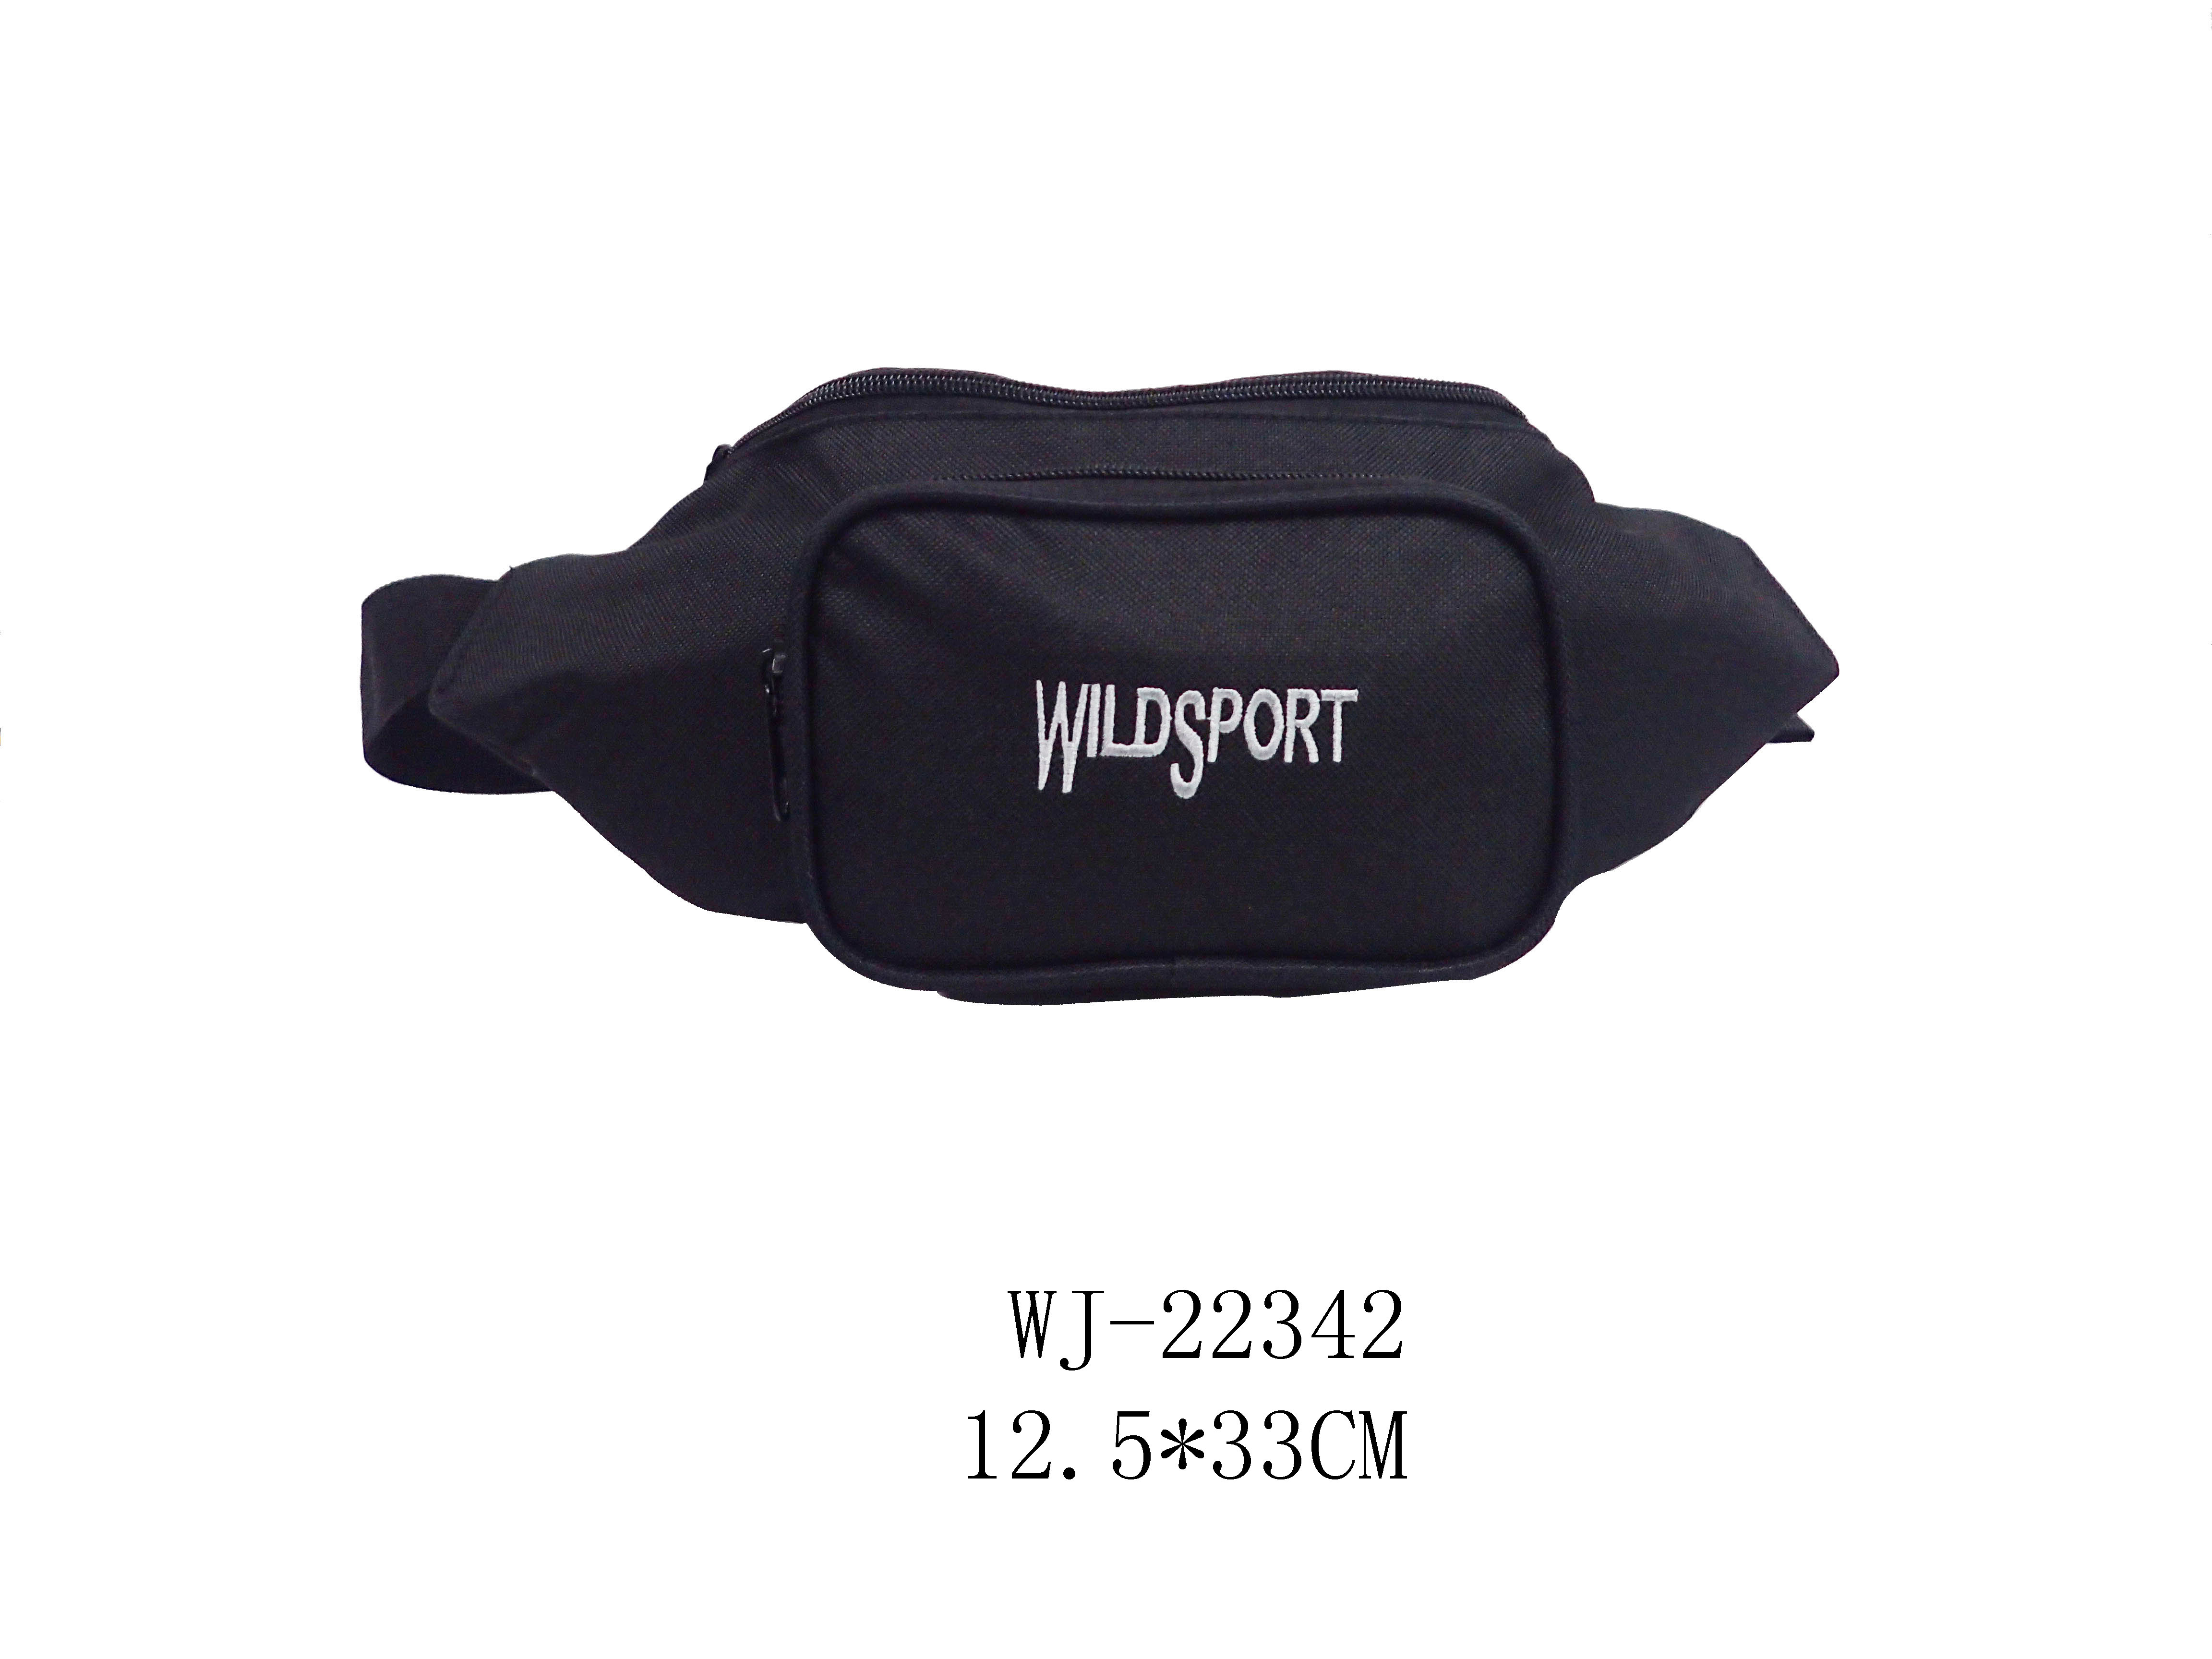 Black 600D outdoor sport waist bag for men